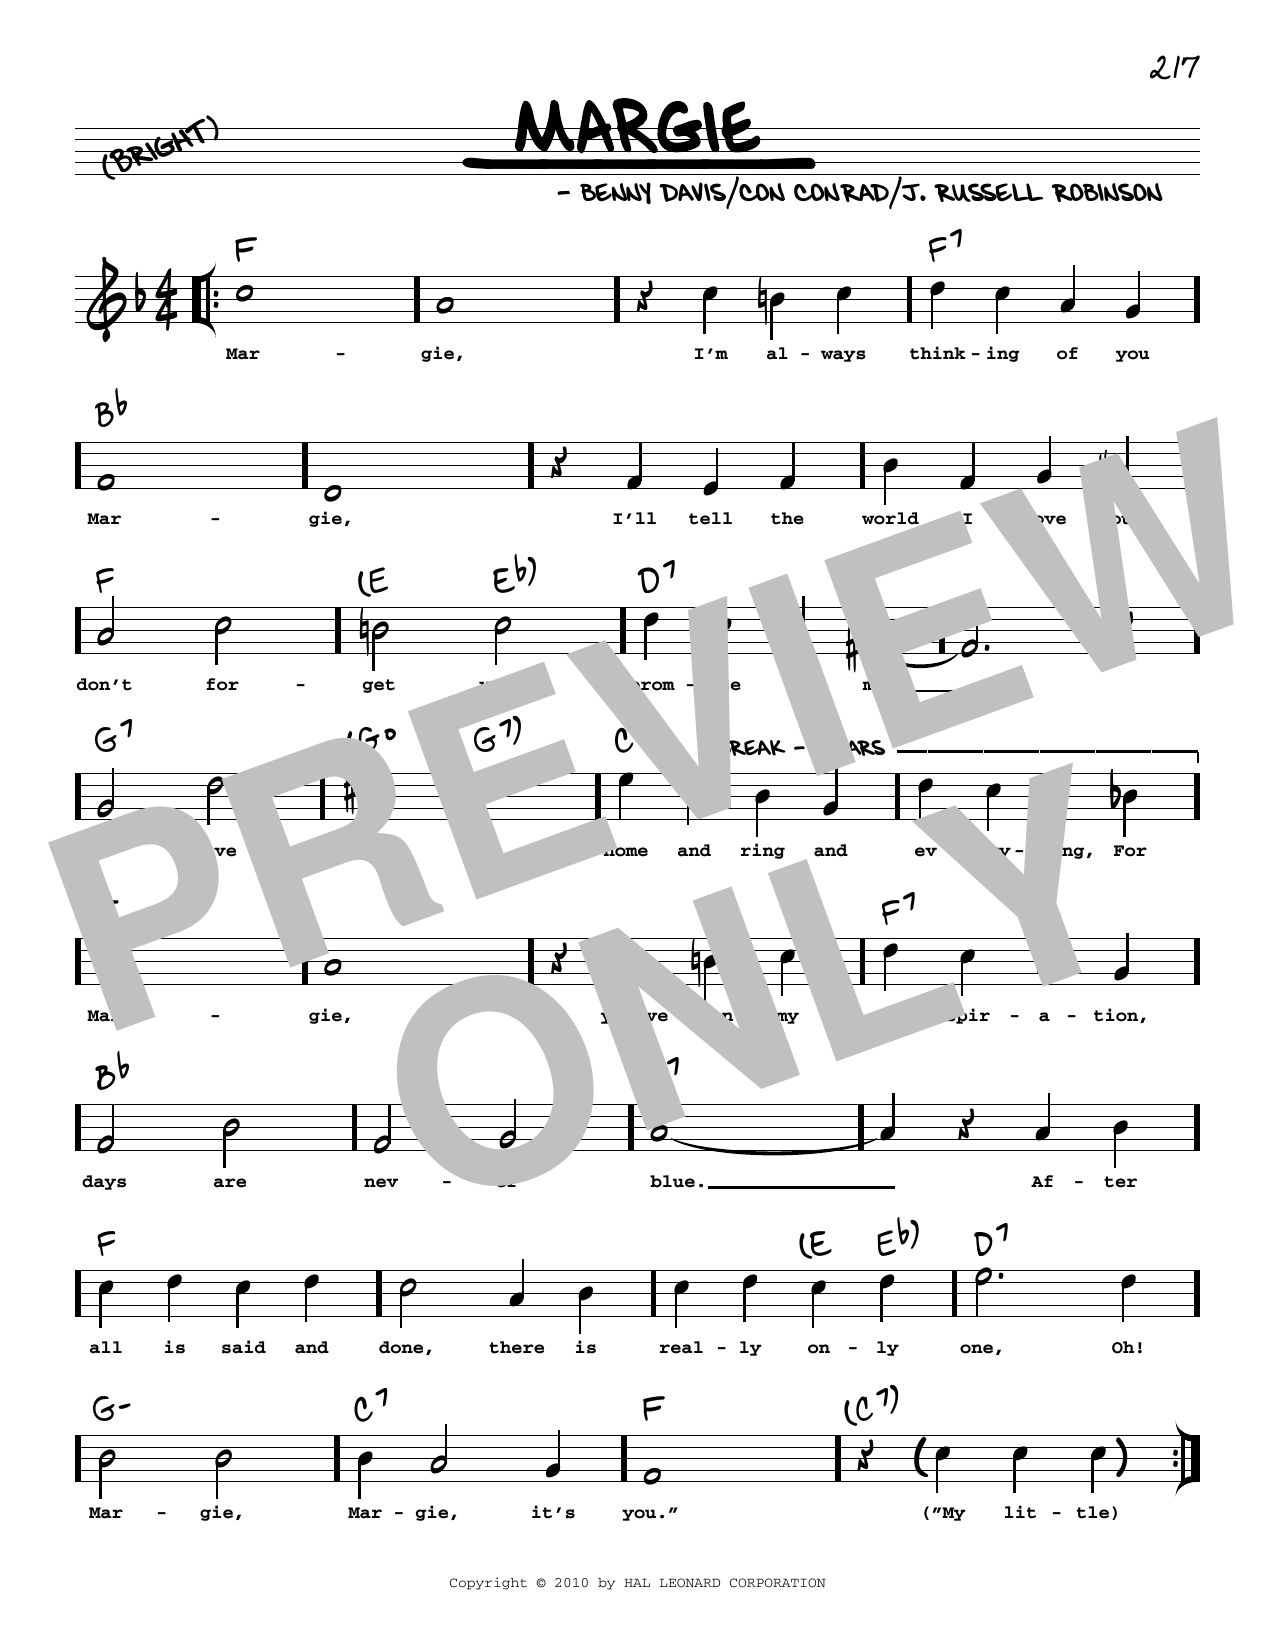 Benny Davis Margie (arr. Robert Rawlins) Sheet Music Notes & Chords for Real Book – Melody, Lyrics & Chords - Download or Print PDF